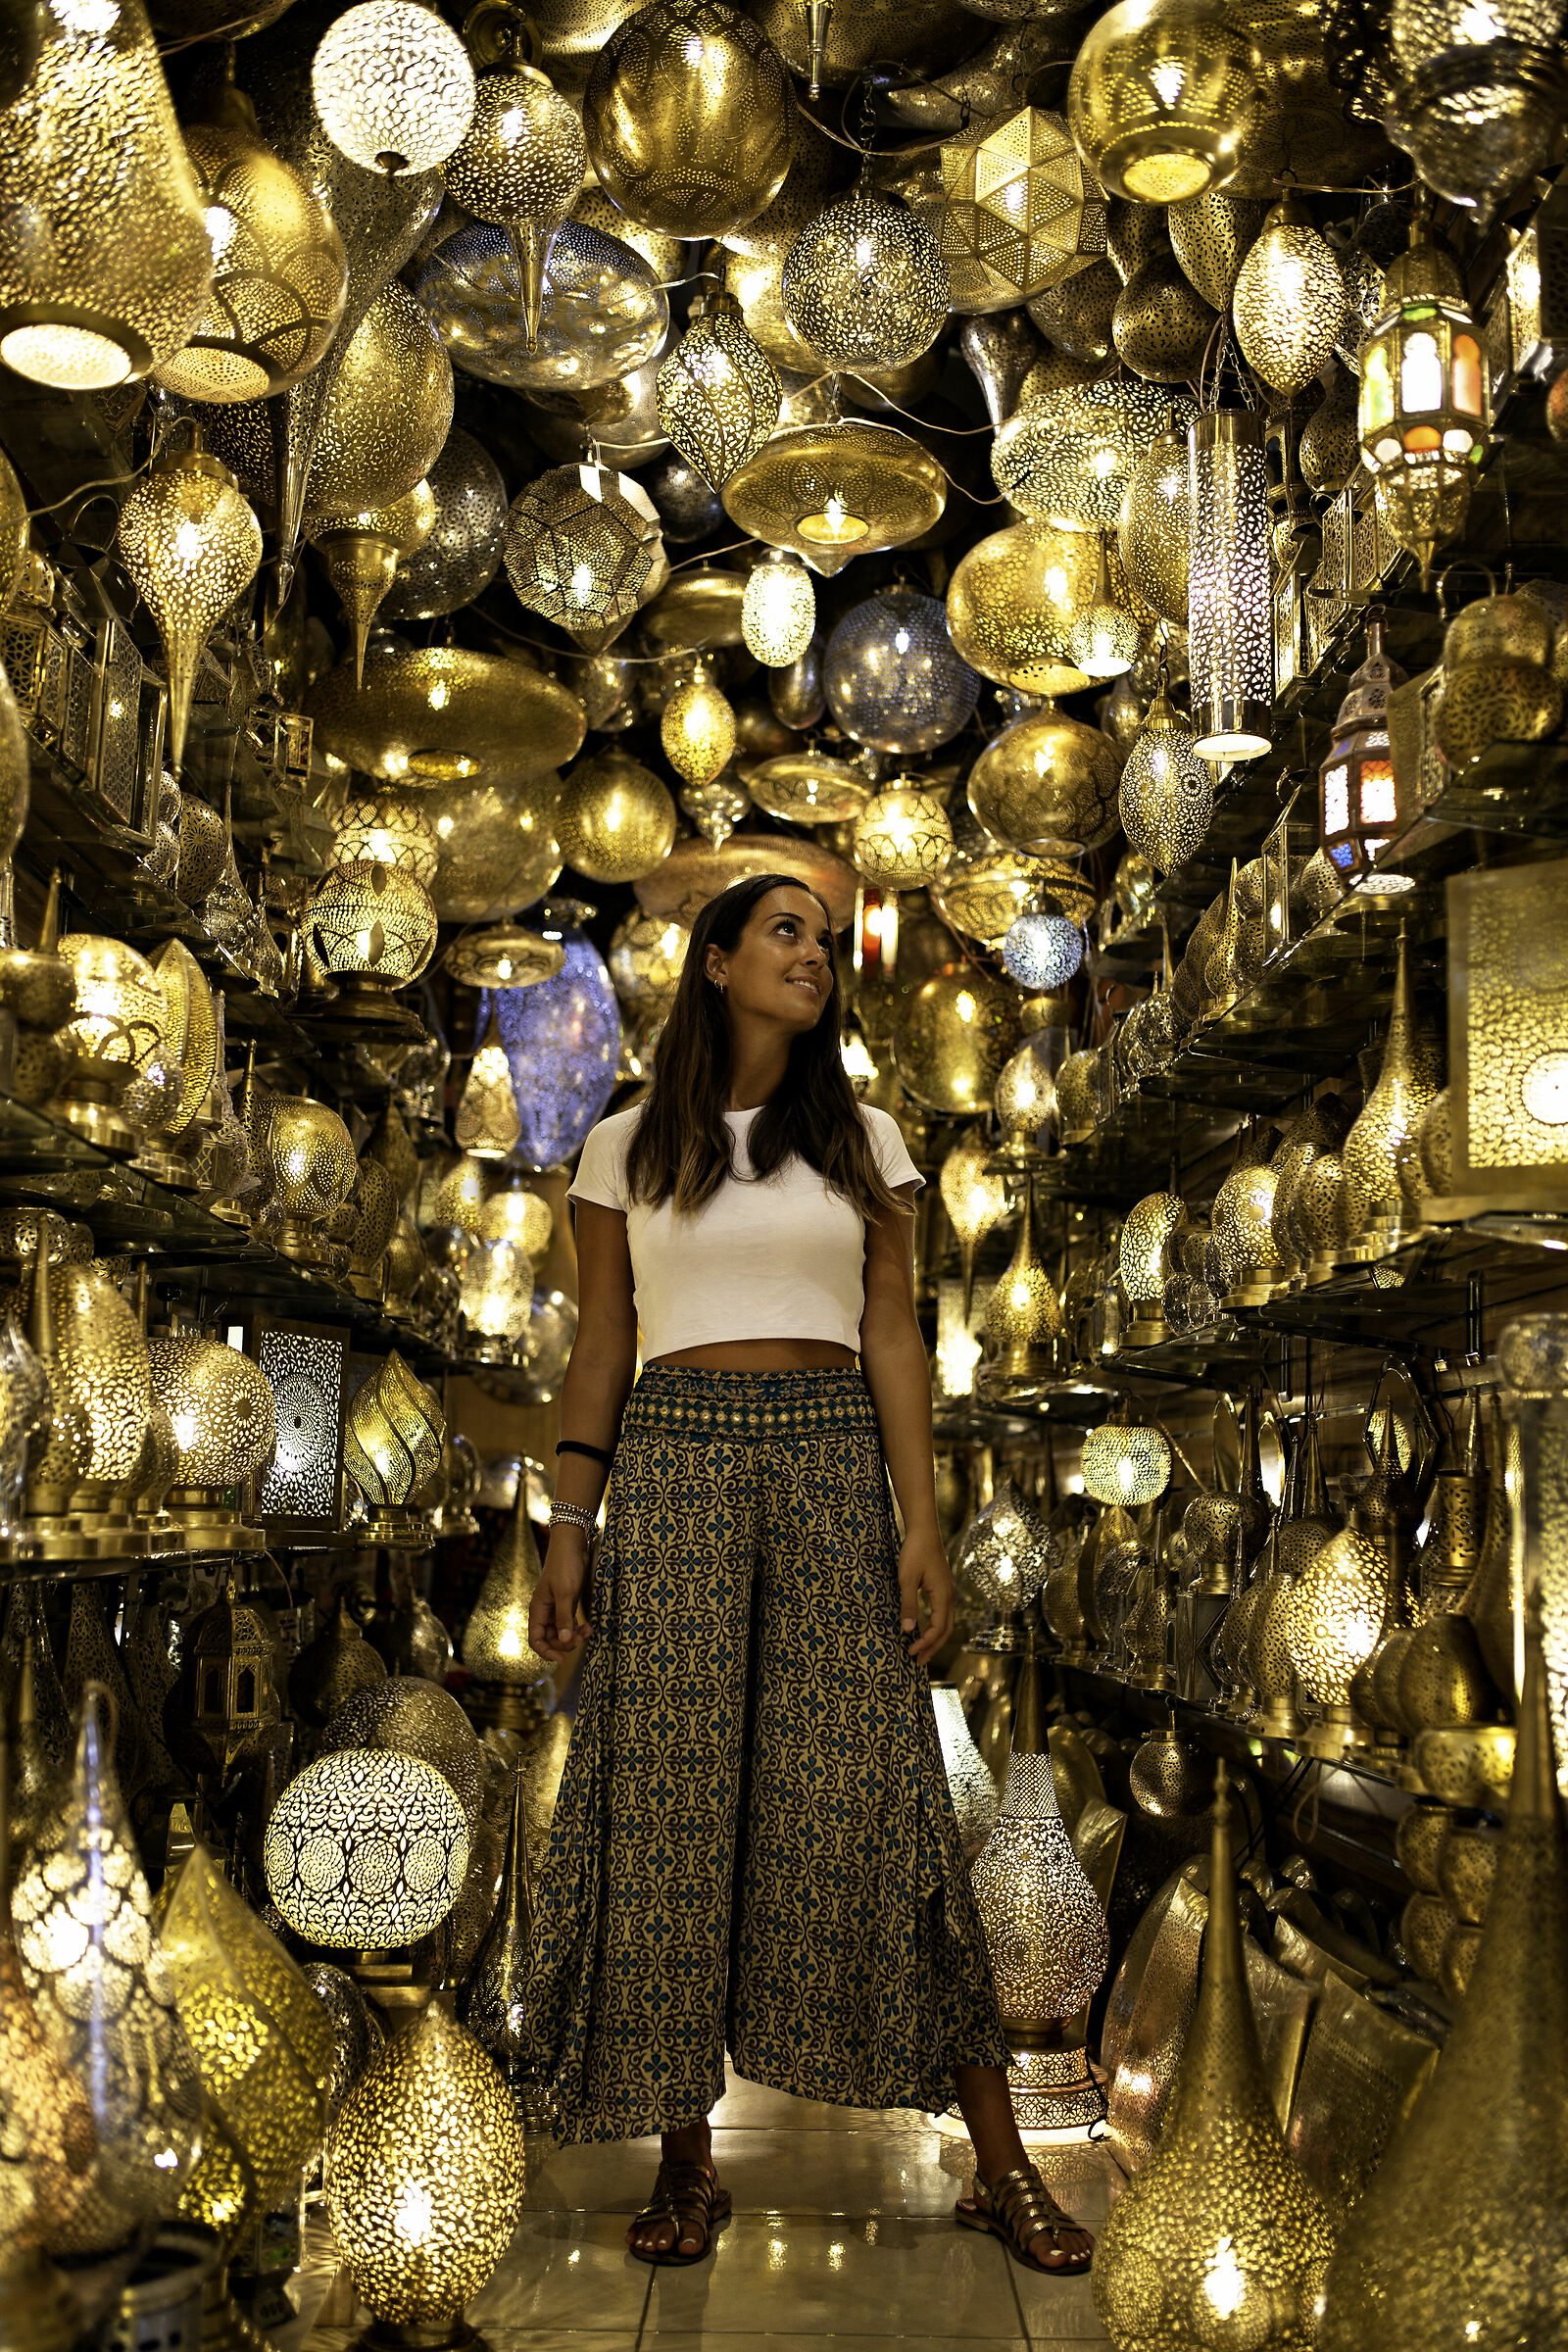 Marrakech lamps...